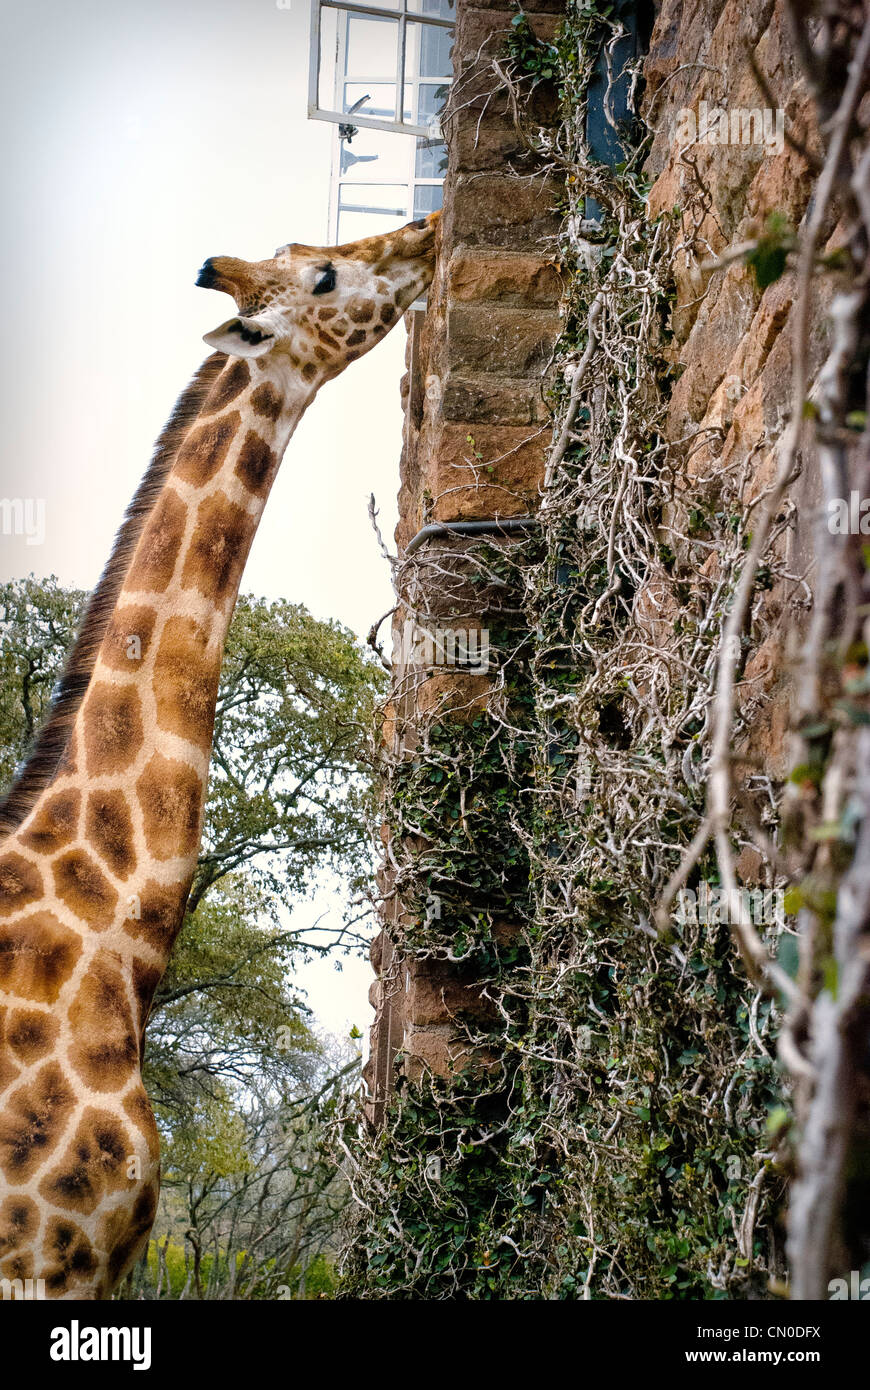 Rothschild or Baringo Giraffe, Giraffa camelopardalis rothschild, being fed at a window of Giraffe Manor, Nairobi, Kenya, Africa Stock Photo